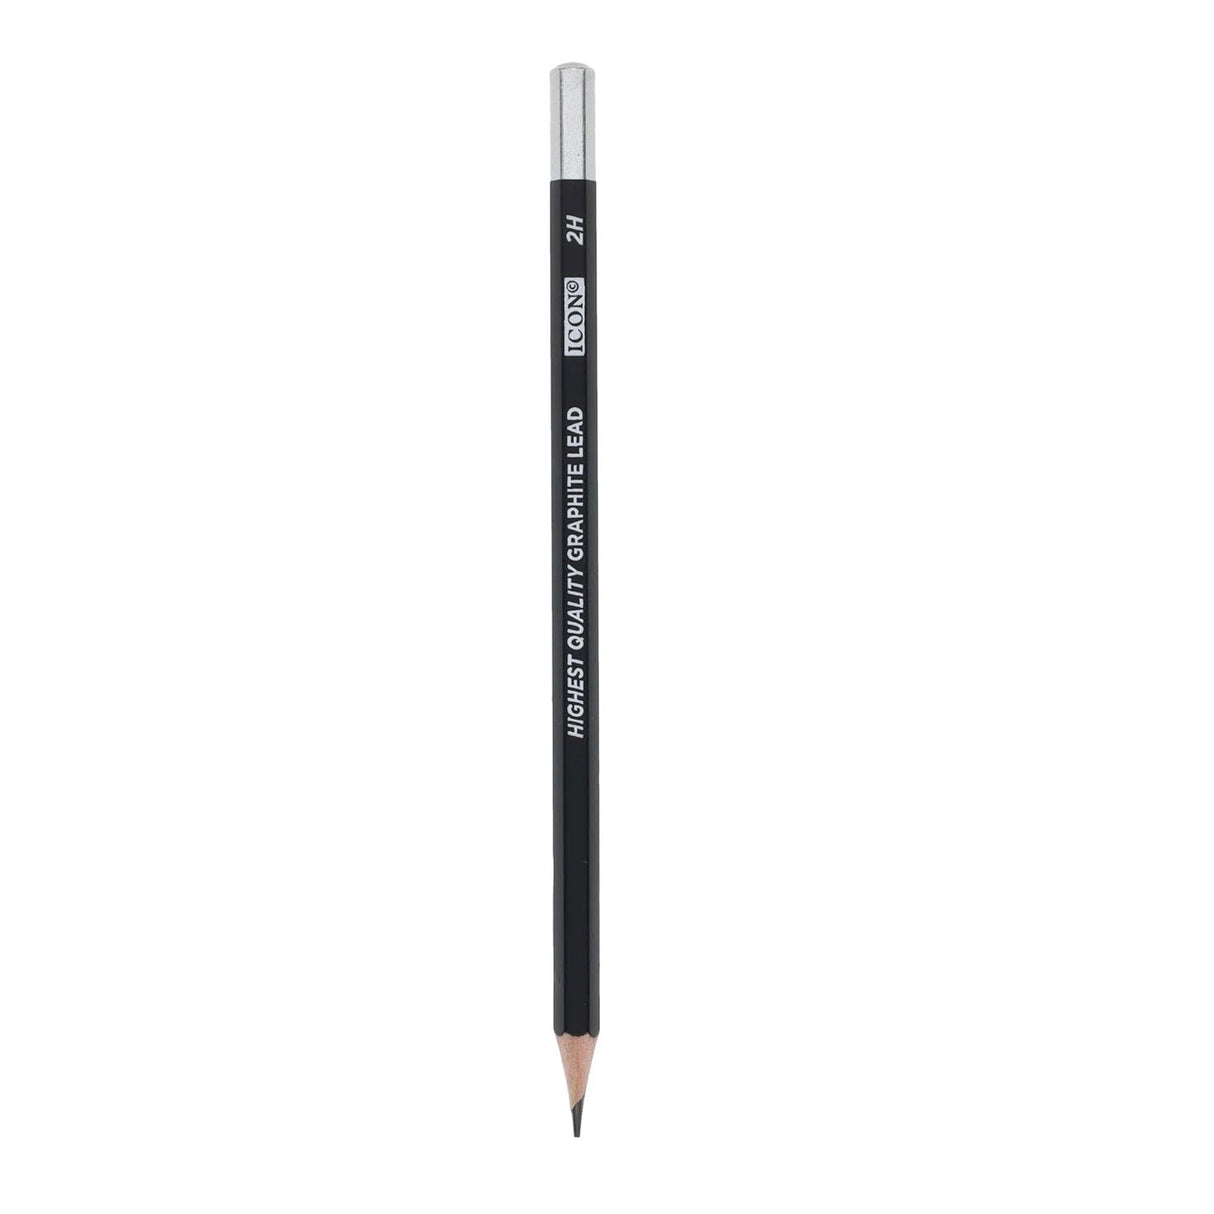 Icon Graphite Pencils - 2H - Box of 12 | Stationery Shop UK